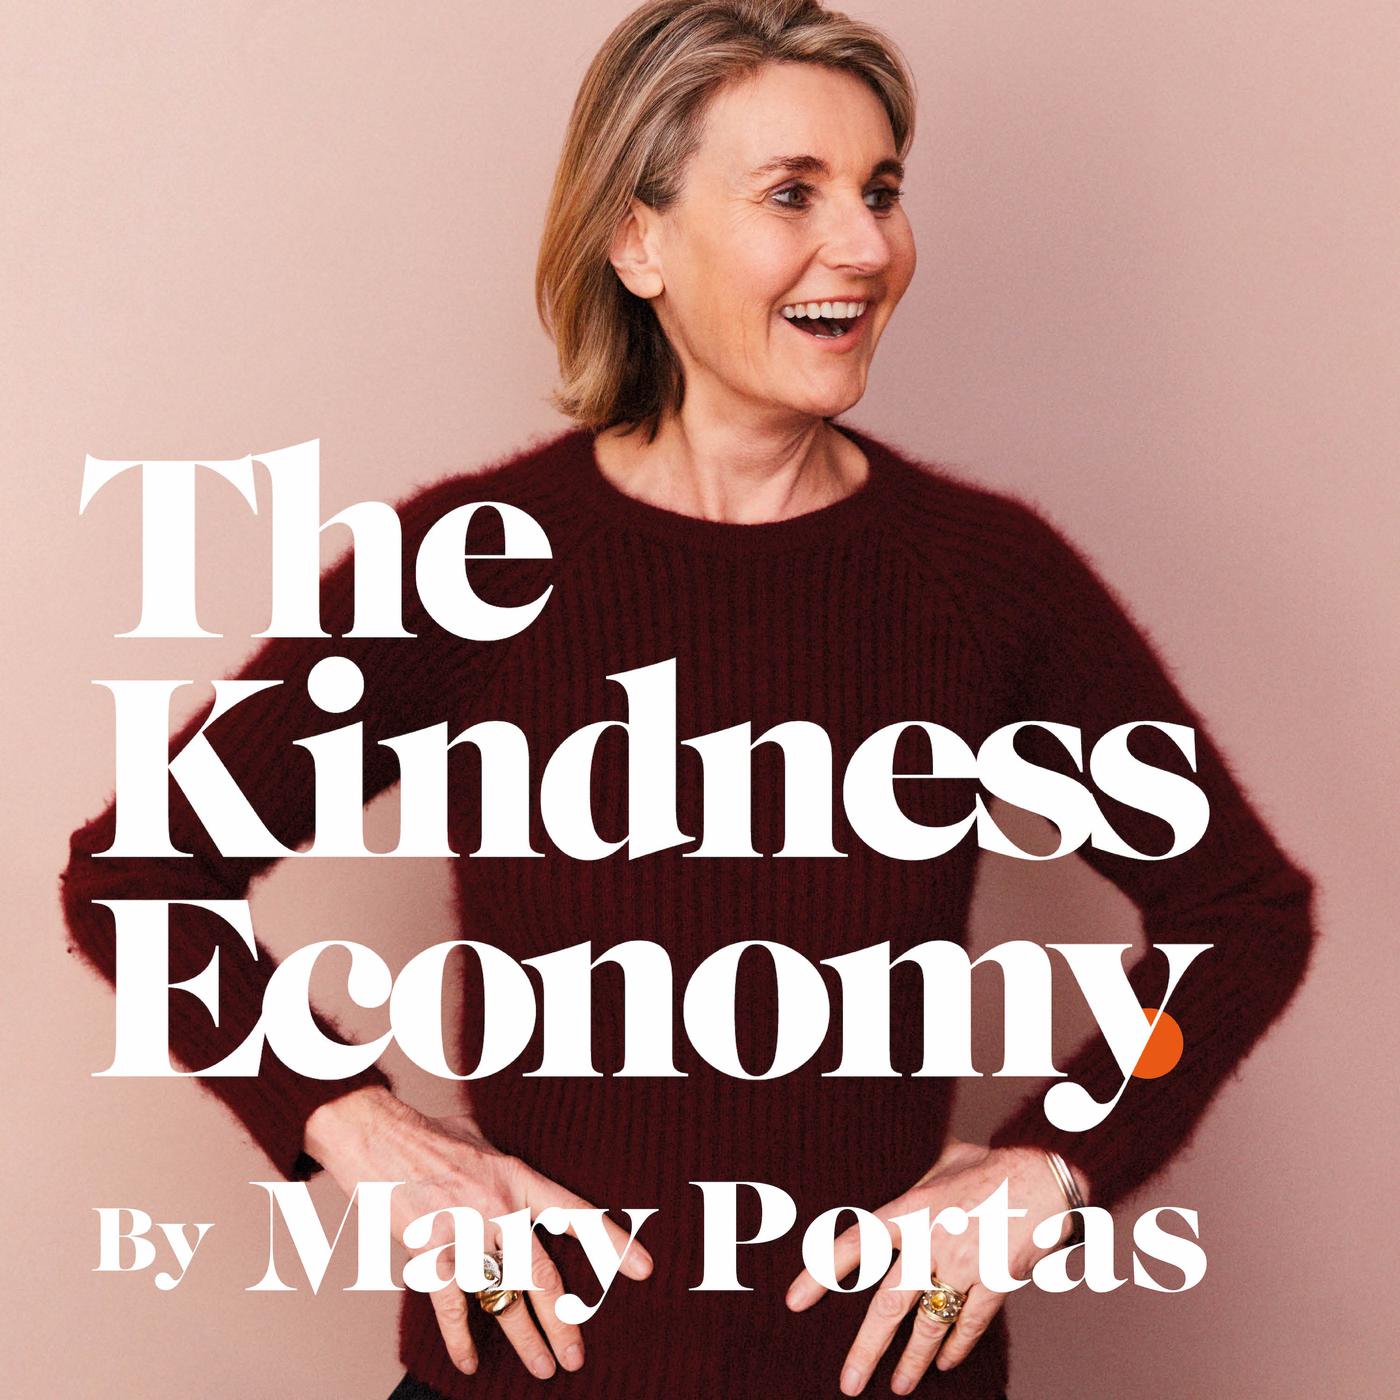 The Kindness Economy